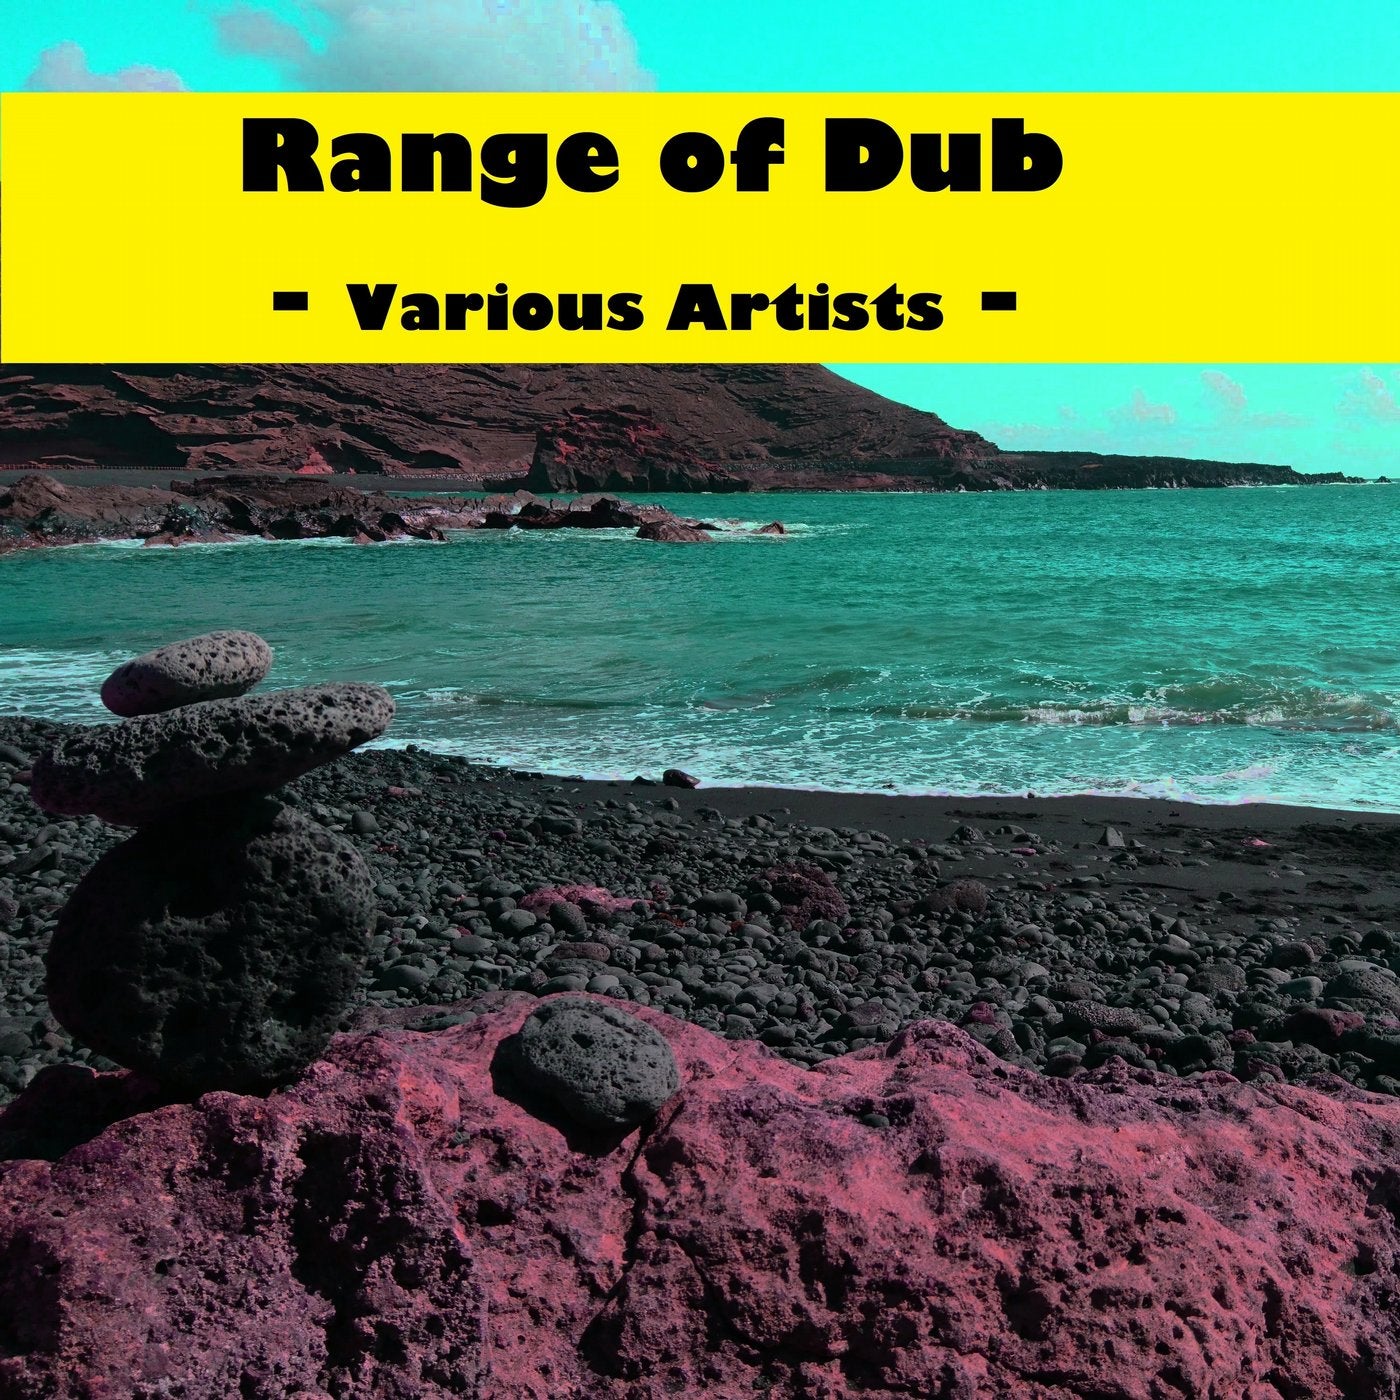 Range of Dub